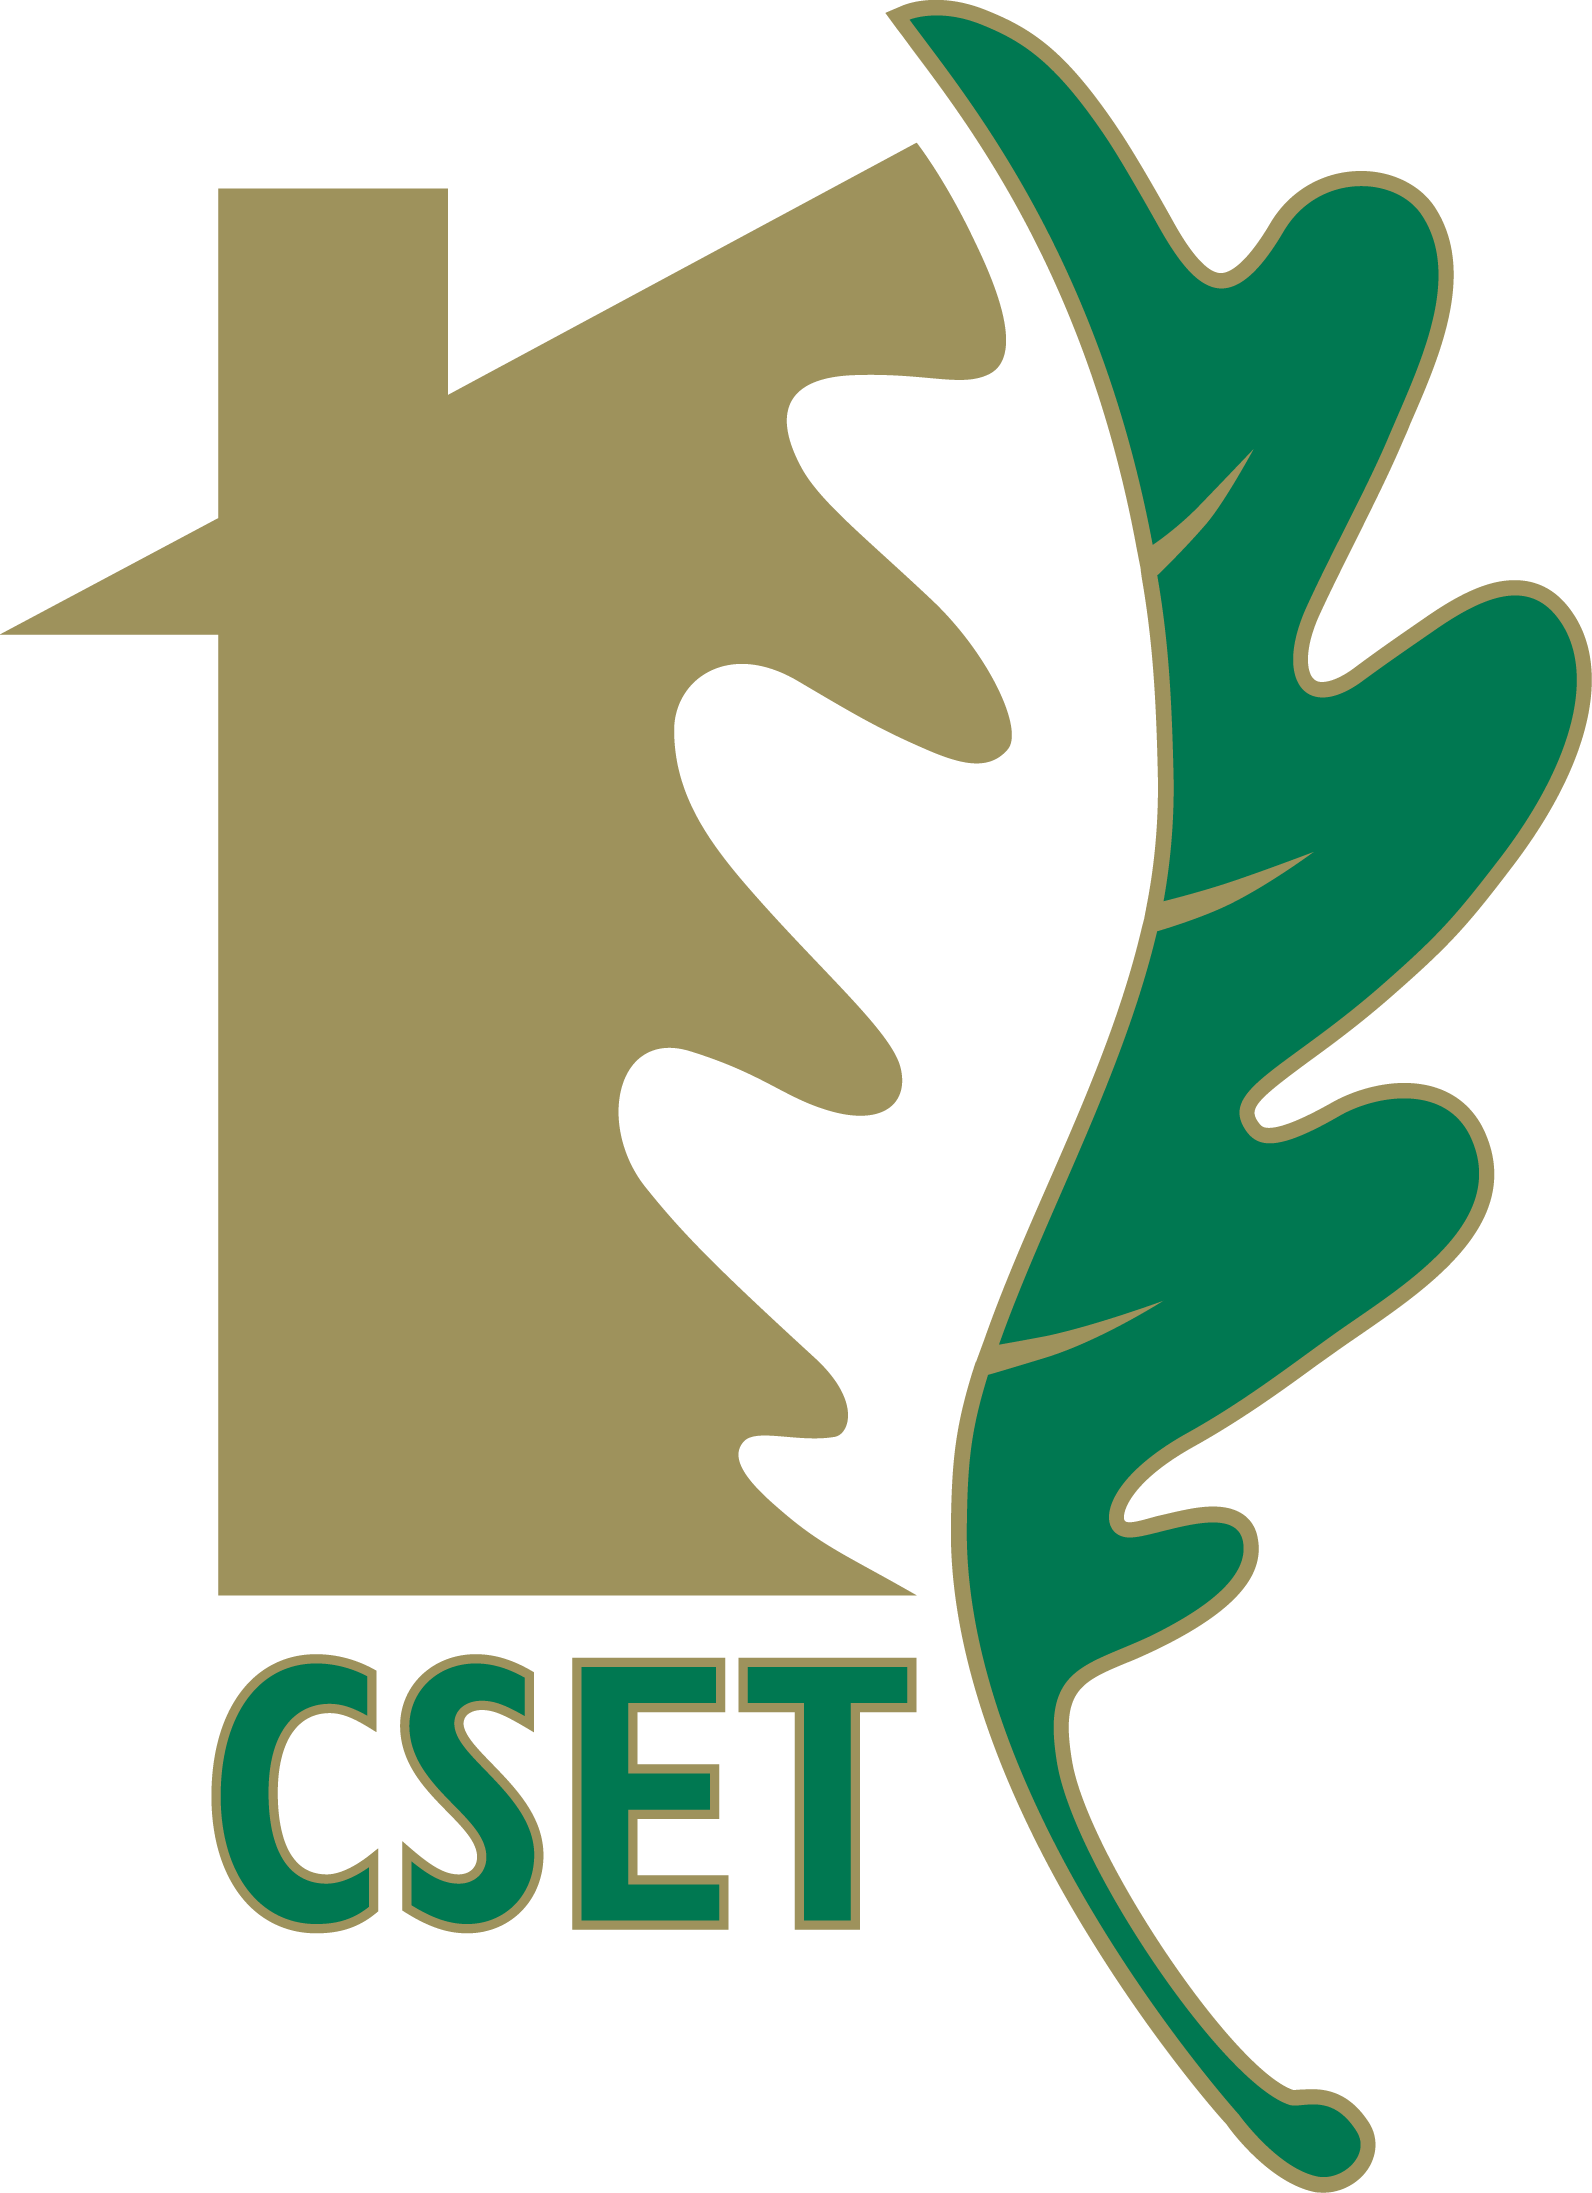 CSET Logo for United Way Portal.png